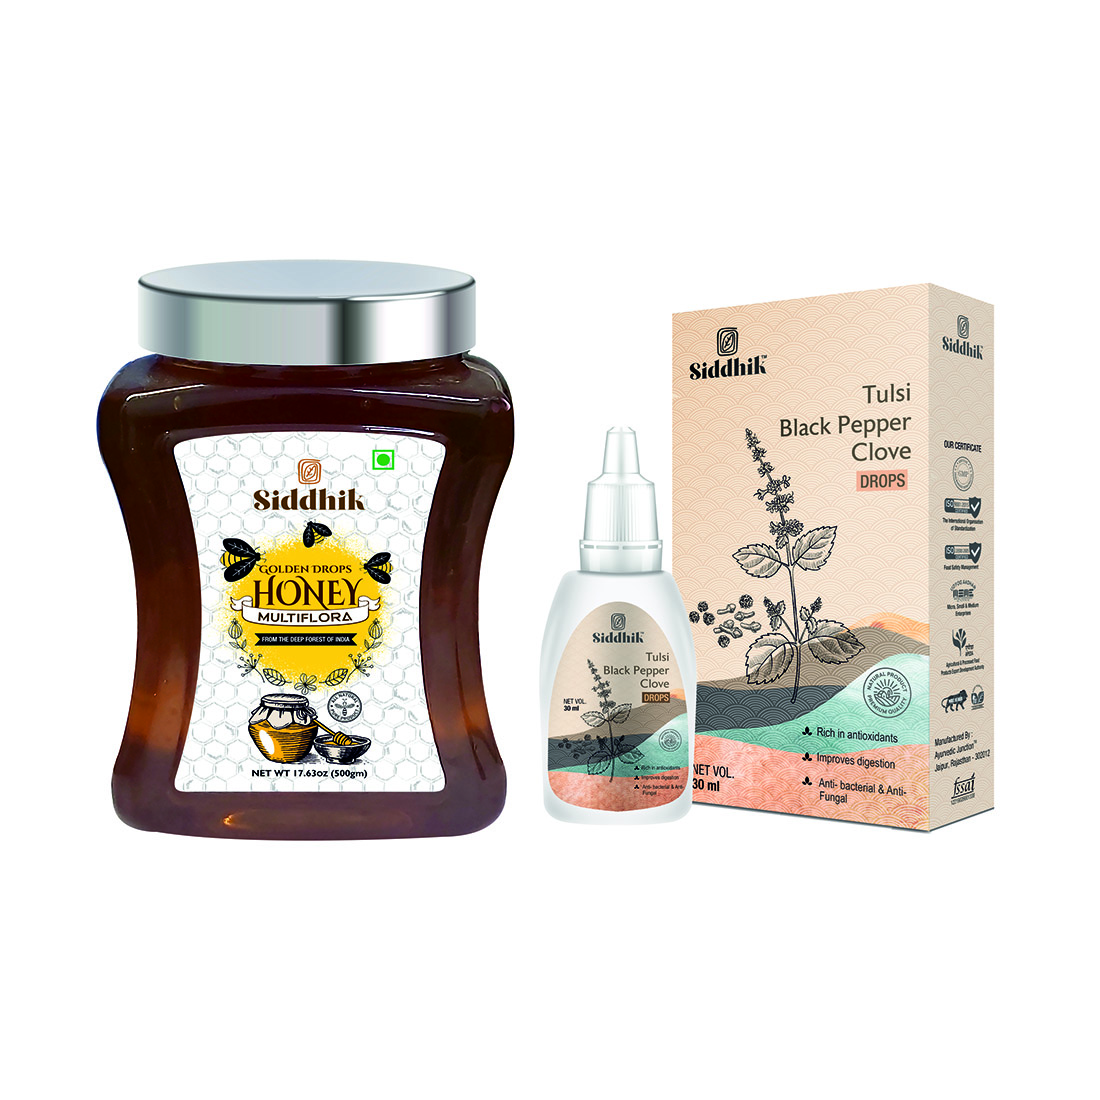 Siddhik Golden Drops Multiflora Honey 500 grams with Tulsi, Black Pepper, Clove Drops 30 ML